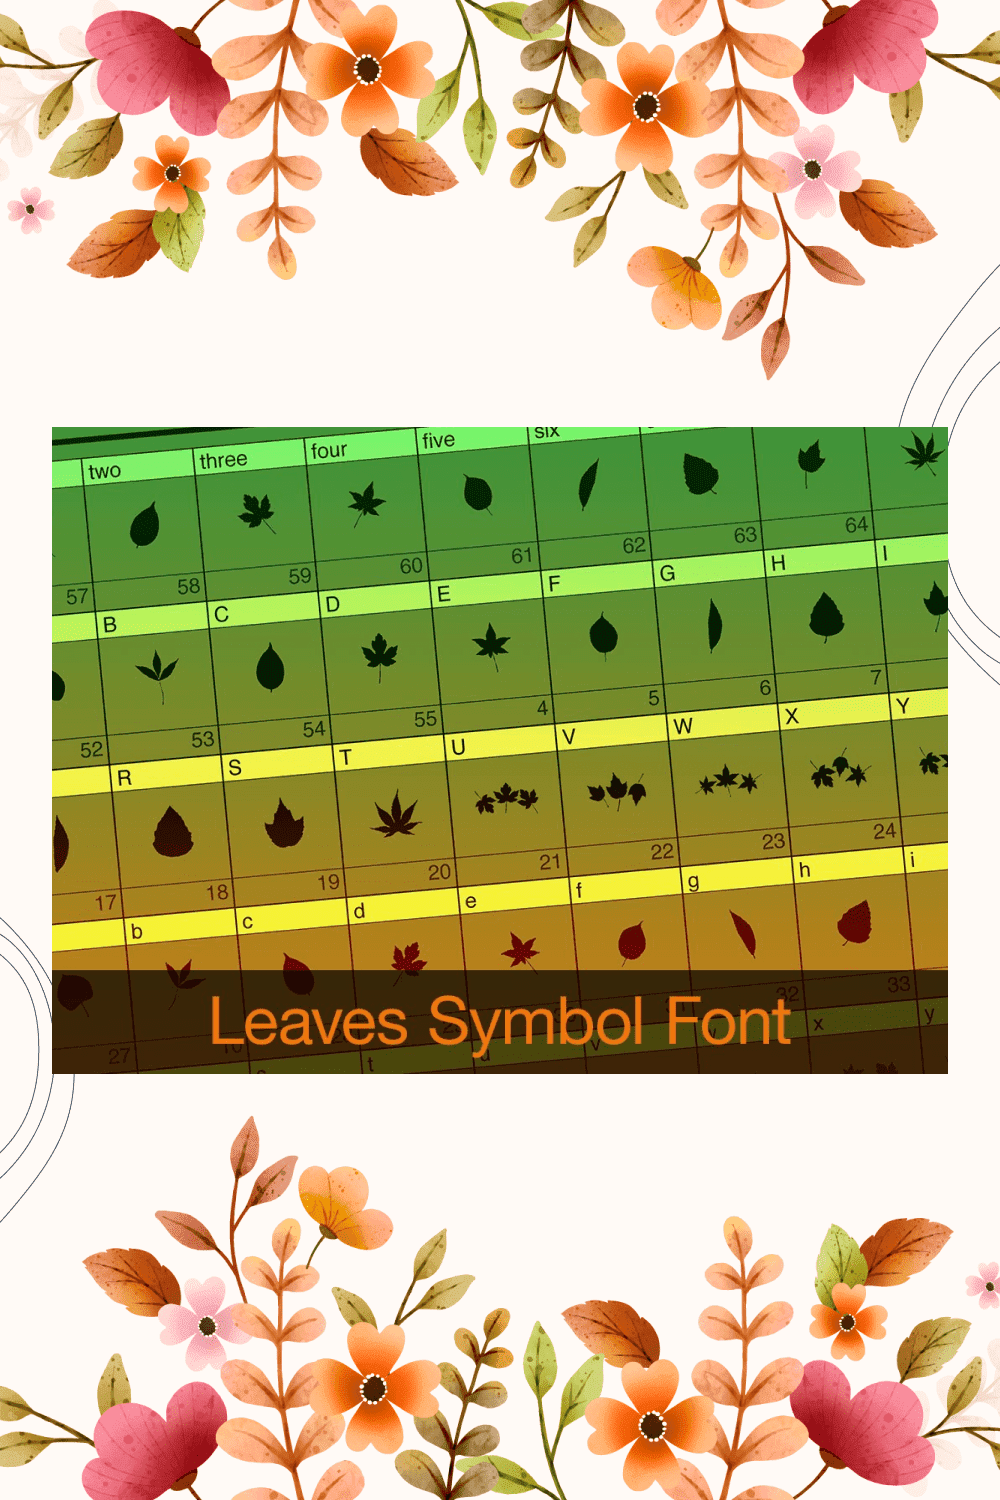 Leaves Symbol Font.